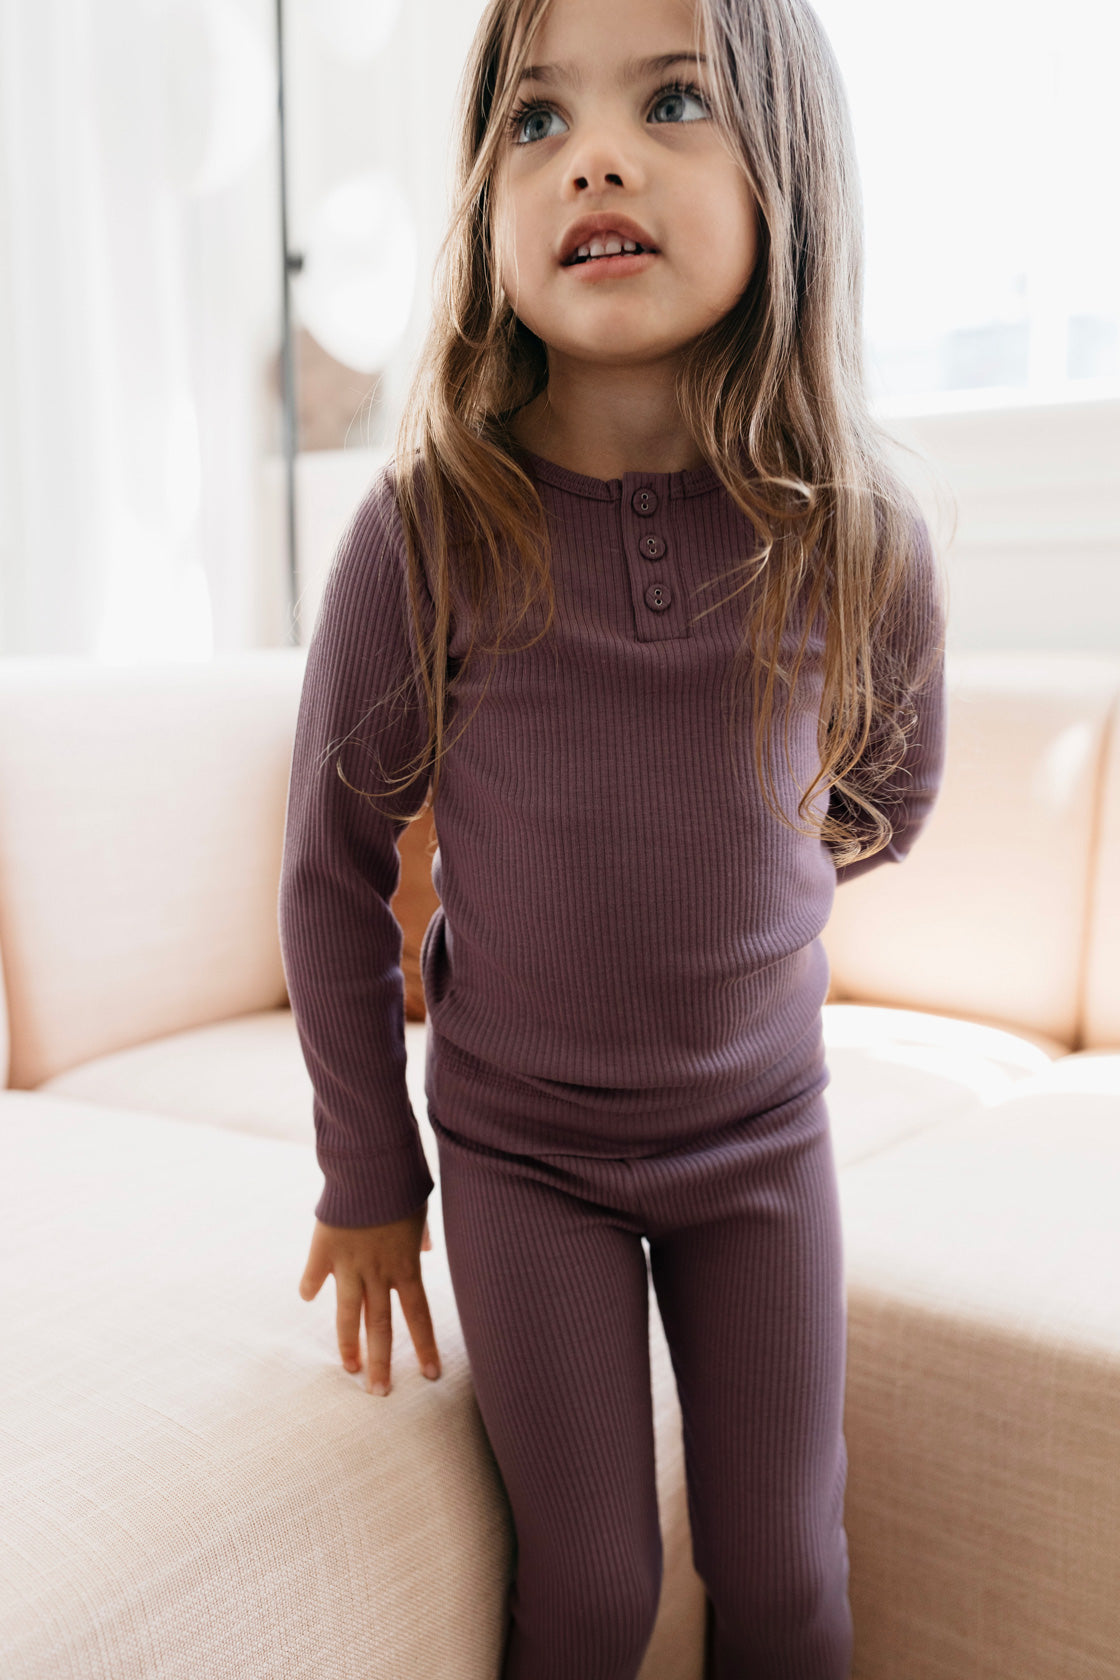 iEFiEL Kids Girls Camouflage Activewear Crop Top with Leggings Yoga Workout  Sportswear Lavender 6